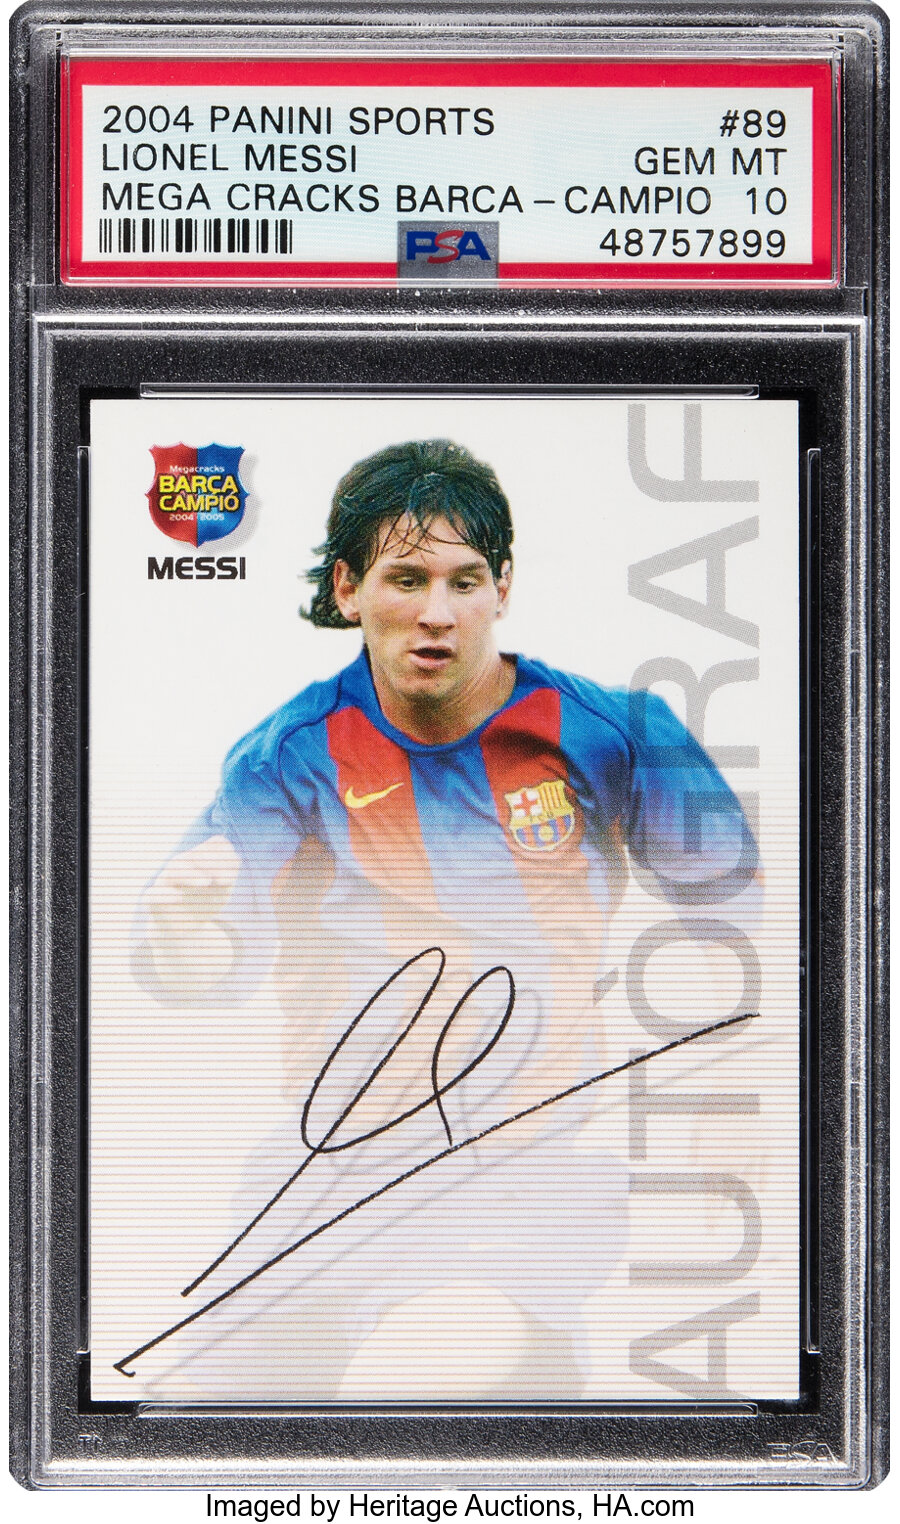 2004 Panini Sports Lionel Messi (Mega Cracks Barca - Campione) Rookie #89 PSA Gem Mint 10